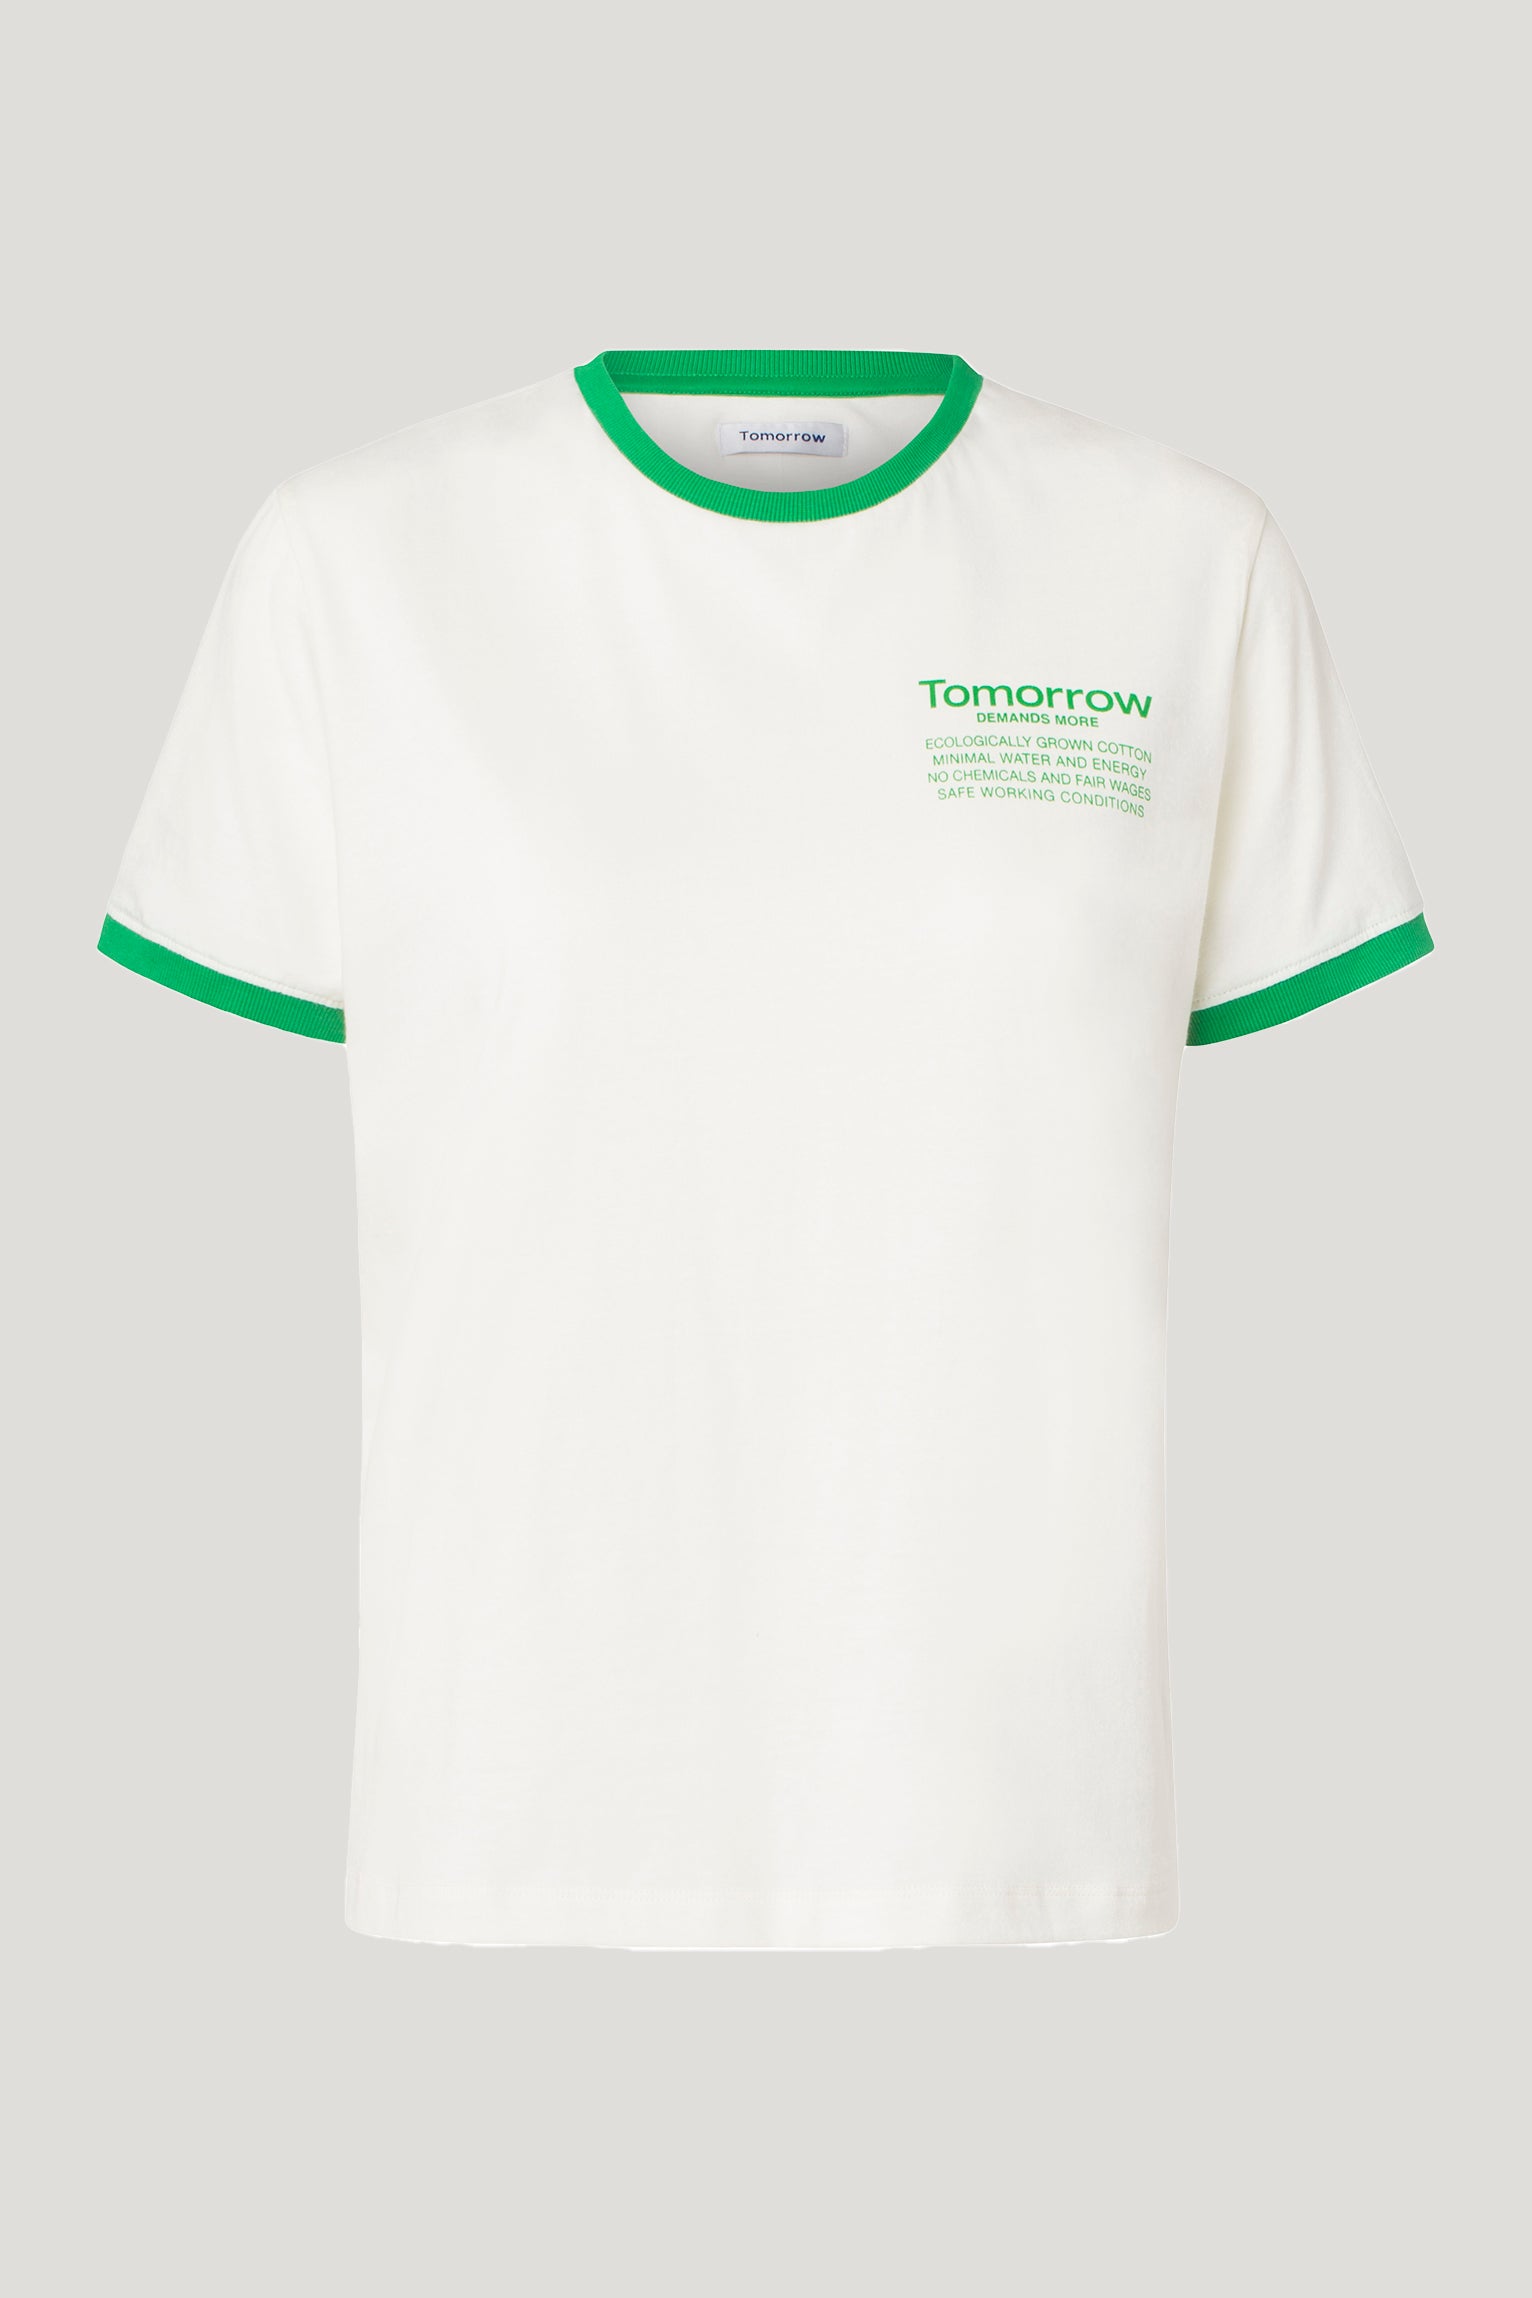 Tomorrow TD Tomorrow Retro Tee Tops & T-shirts 671 Earth Green